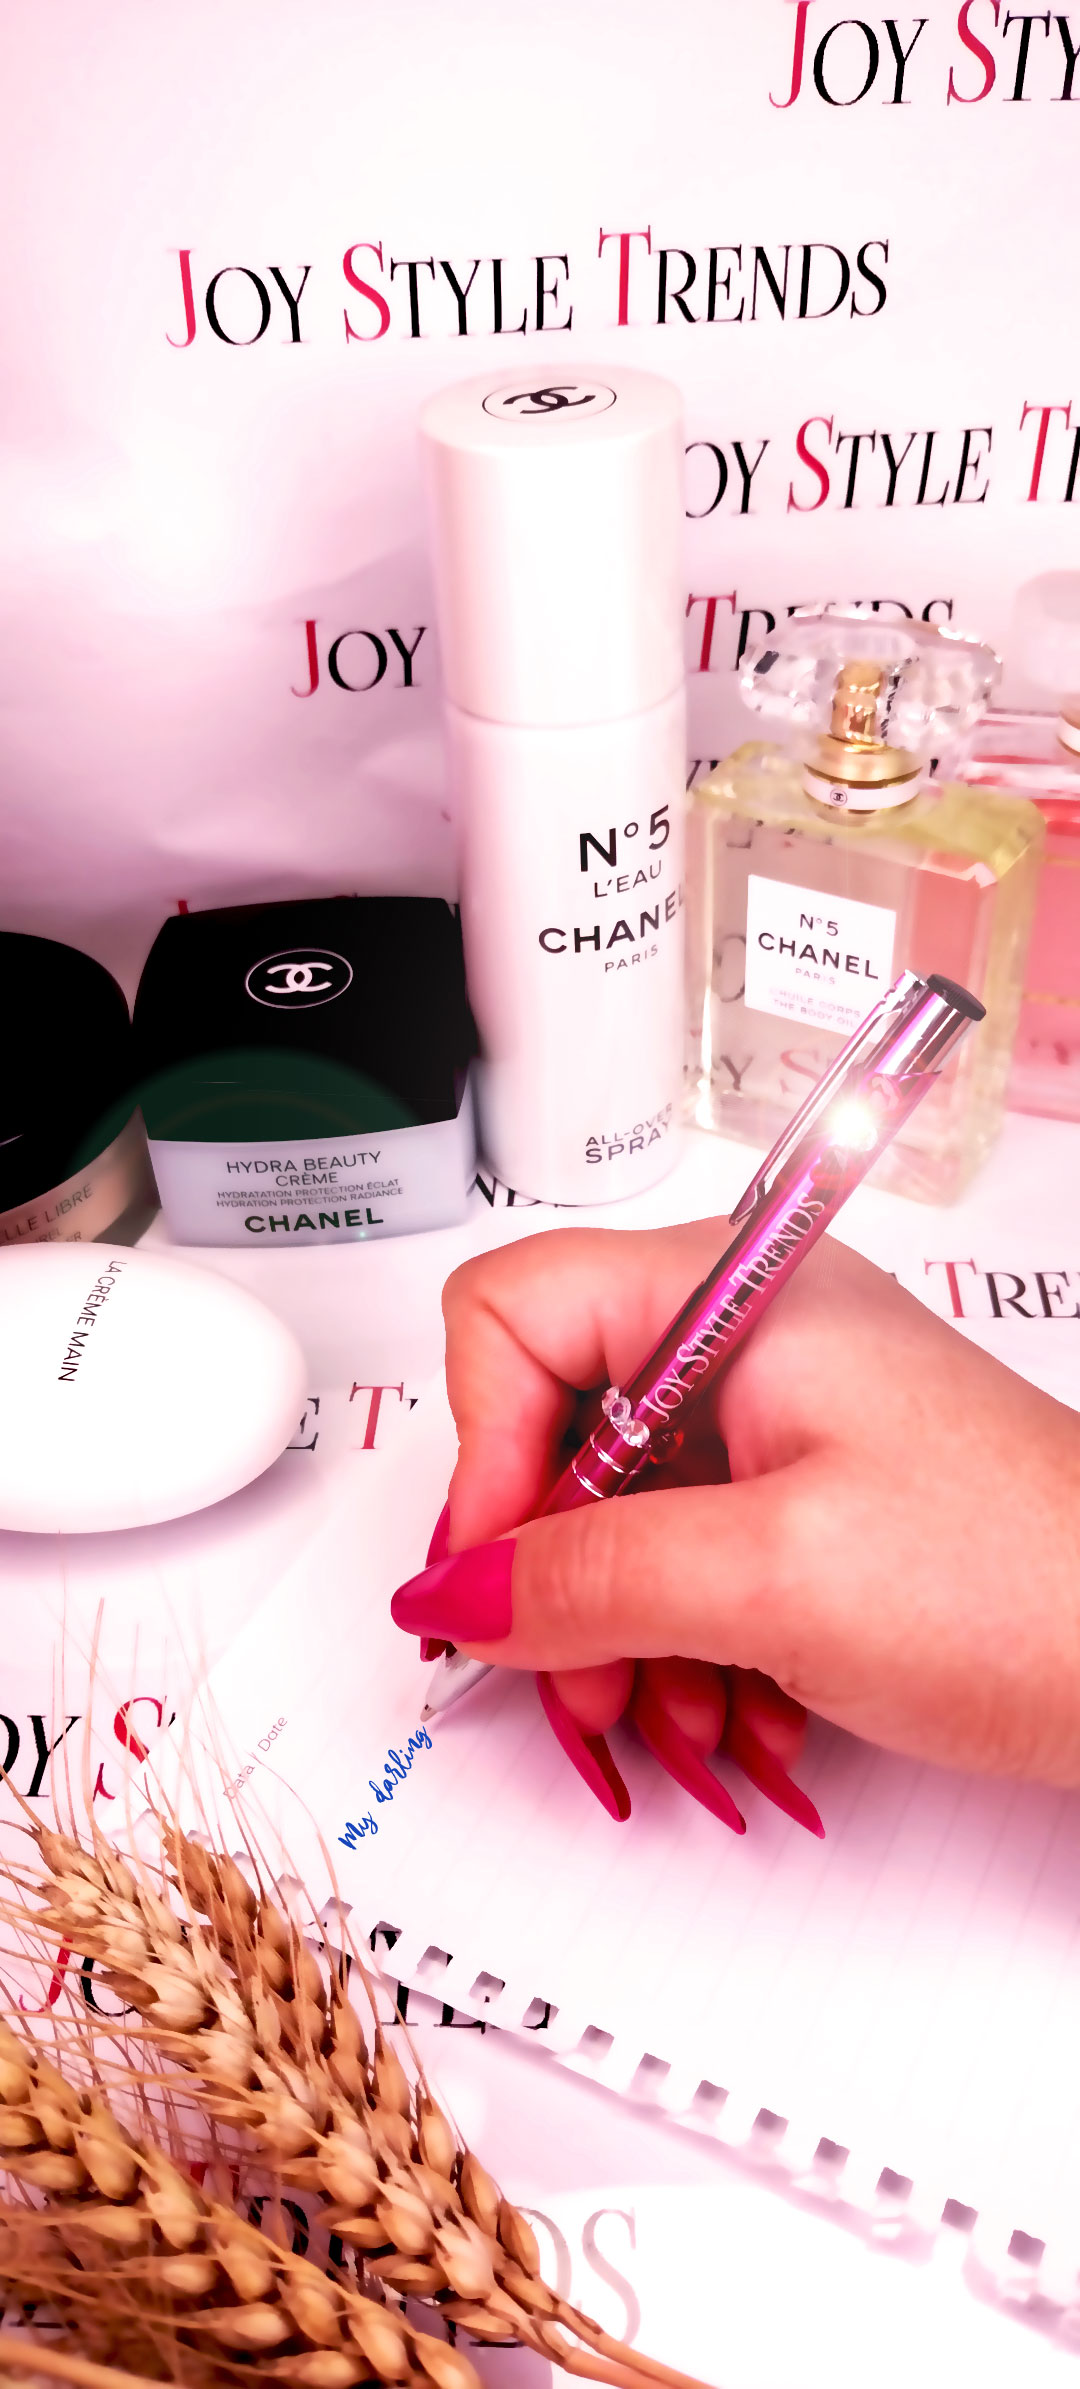 Joy Style Trends Luxurious Pink Pen, Photo Of Joy Style Trends Media